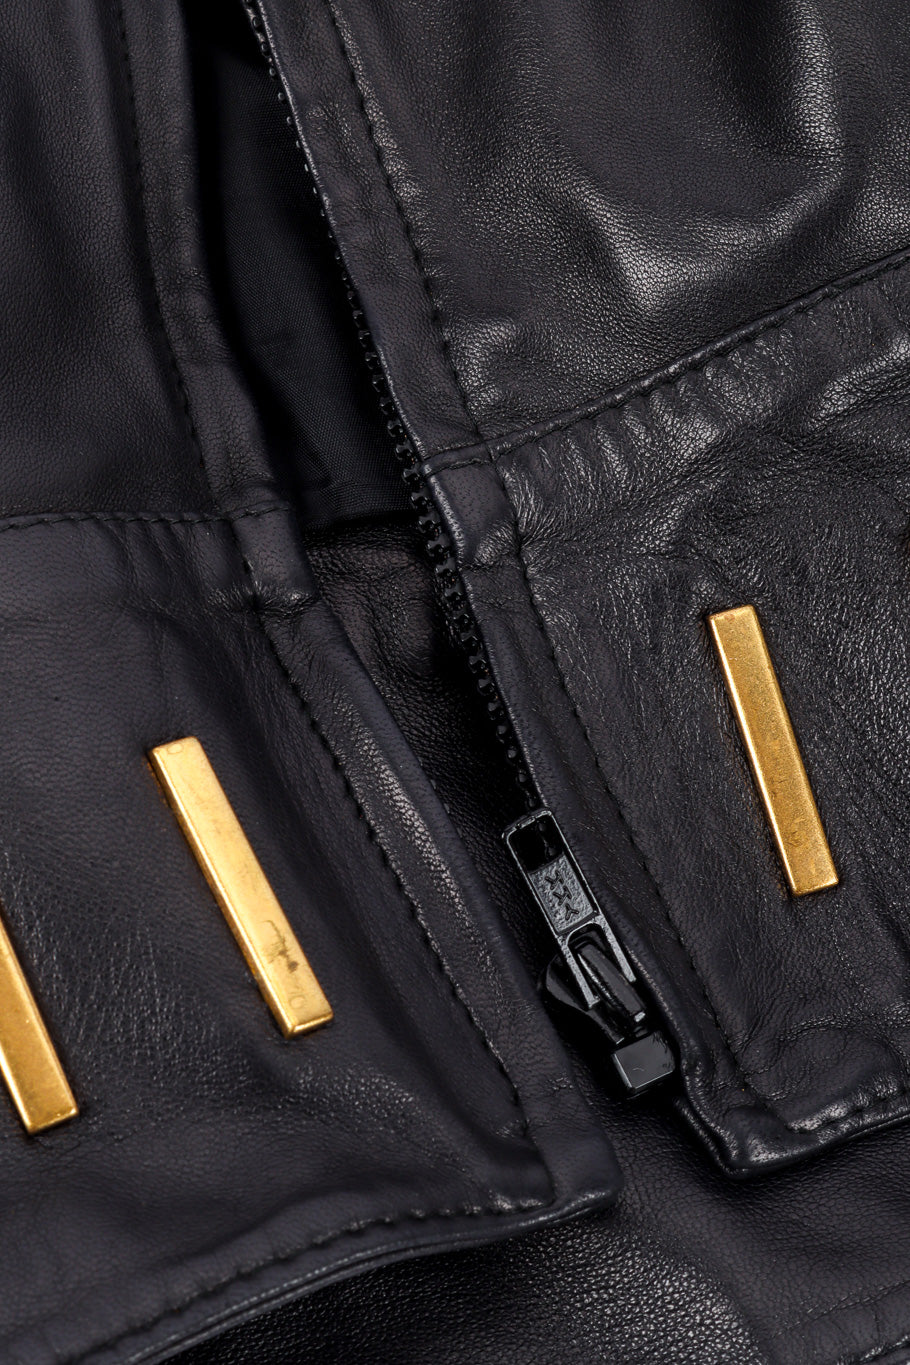 Vintage Lina Lee Studded Leather Jacket zipper closure closeup @recessla